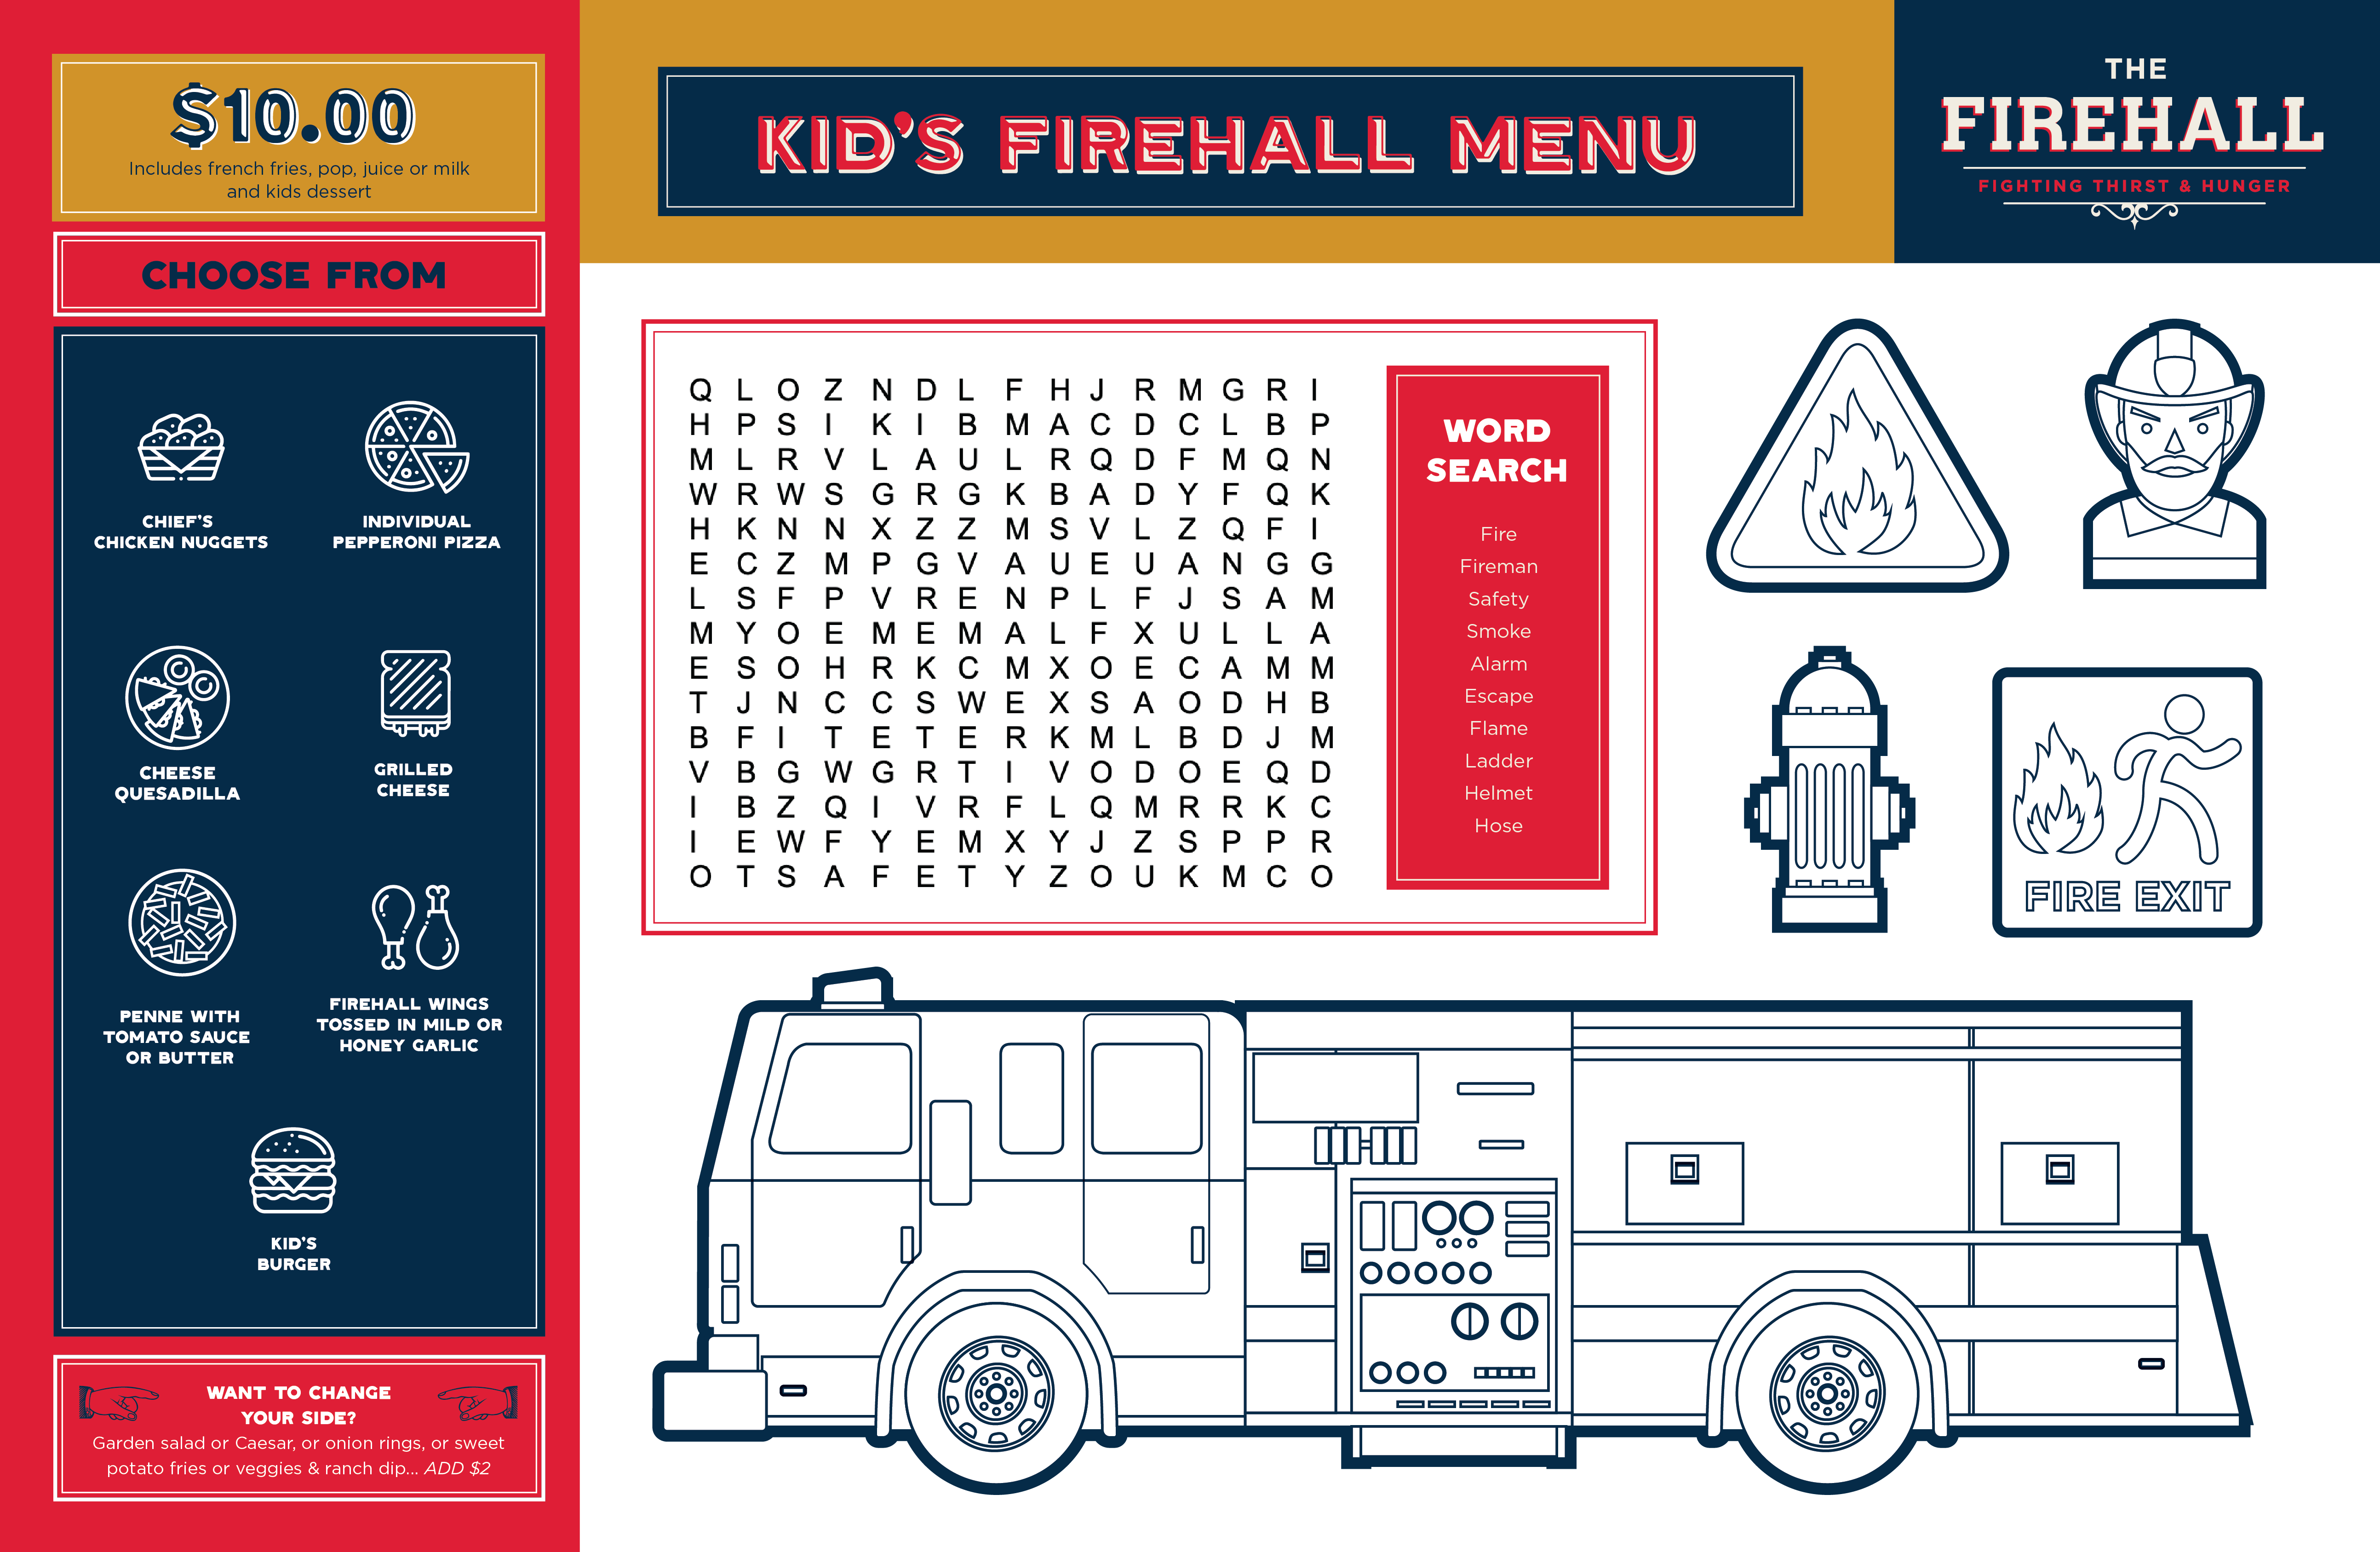 The Firehall kids menu